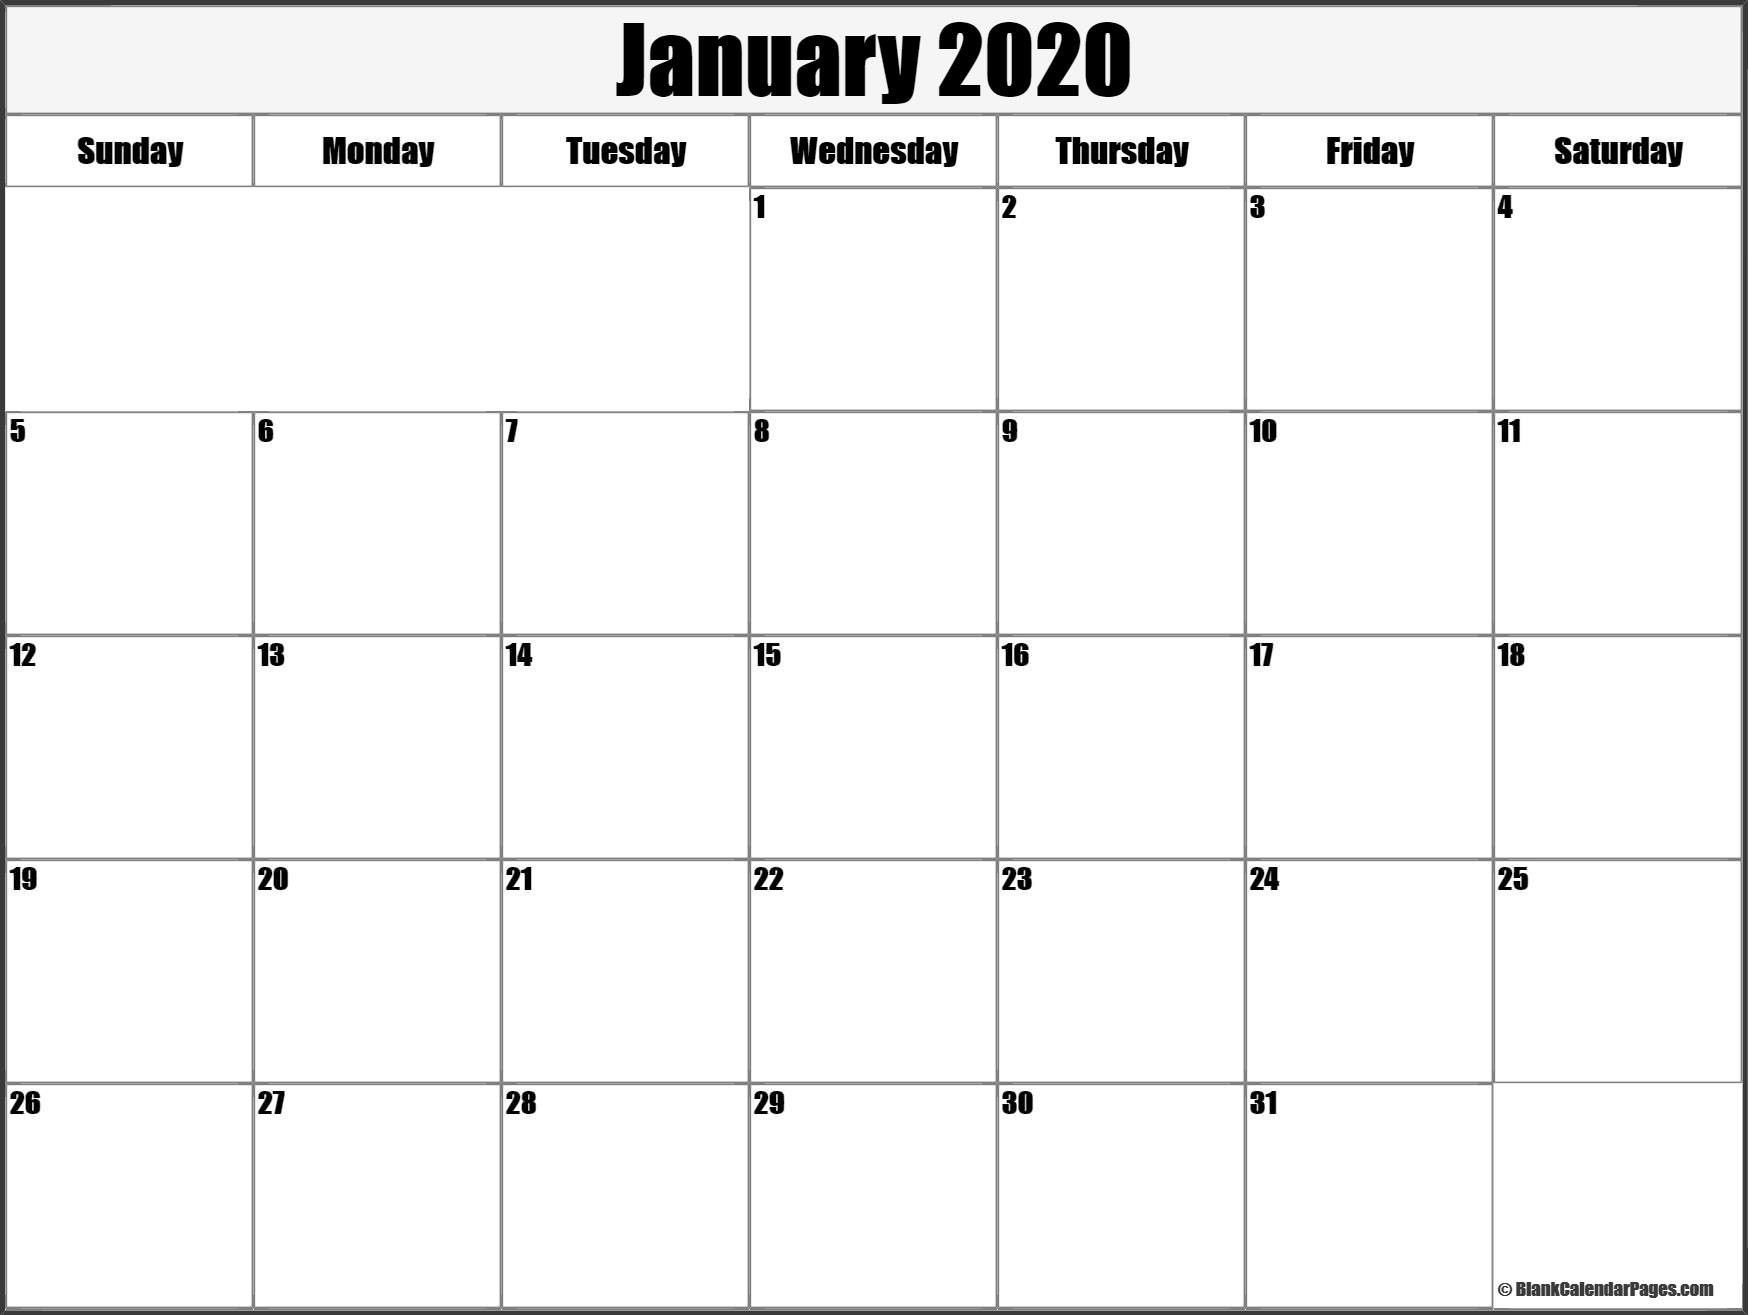 January 2020 Calendar Template #january #january2020-January 2020 Calendar Gujarati